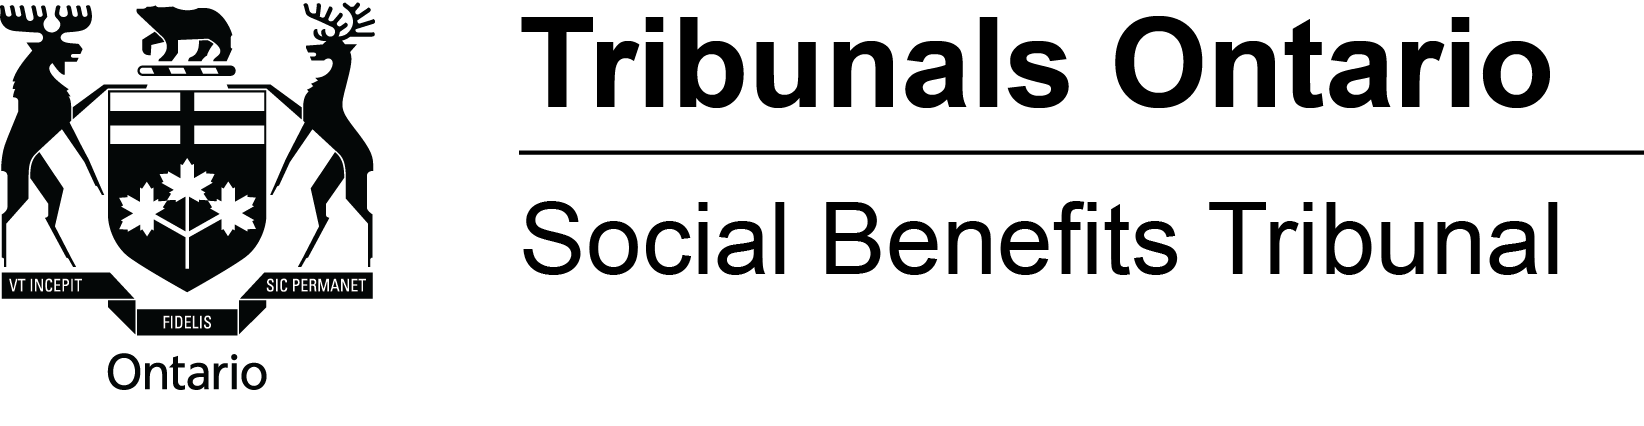 Social Benefits Tribunal logo.